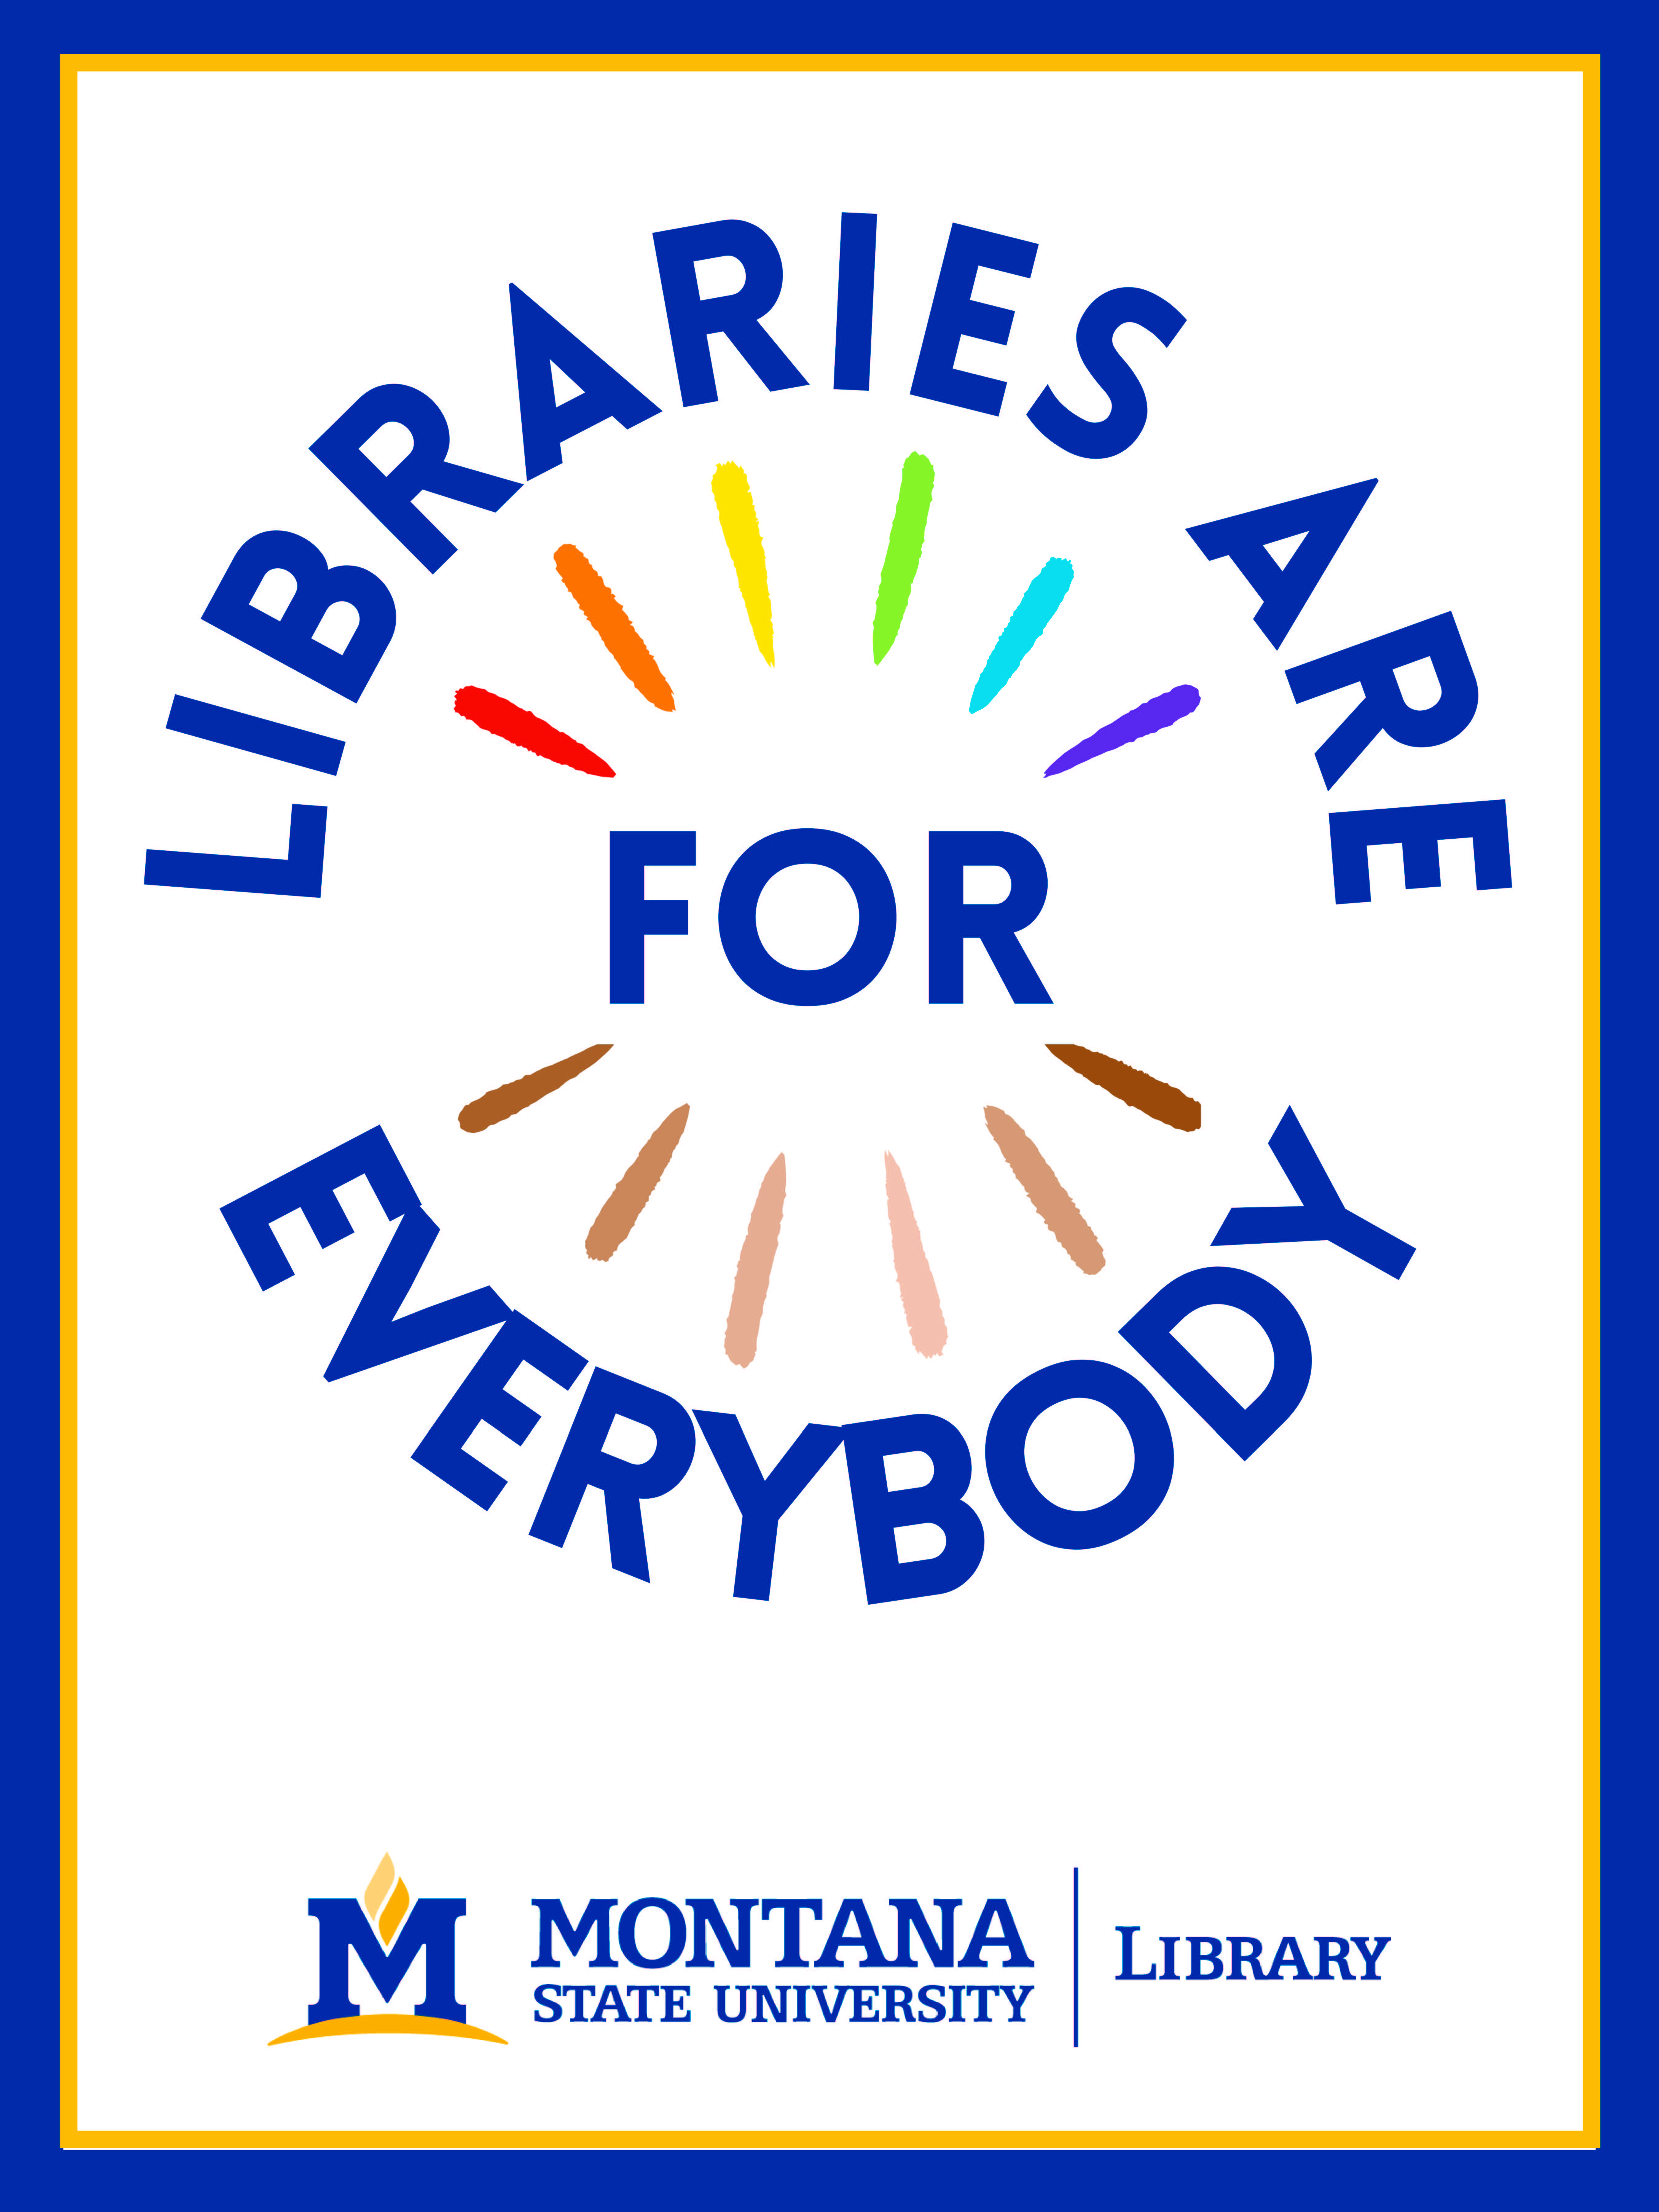 LibrariesAreForEverybody